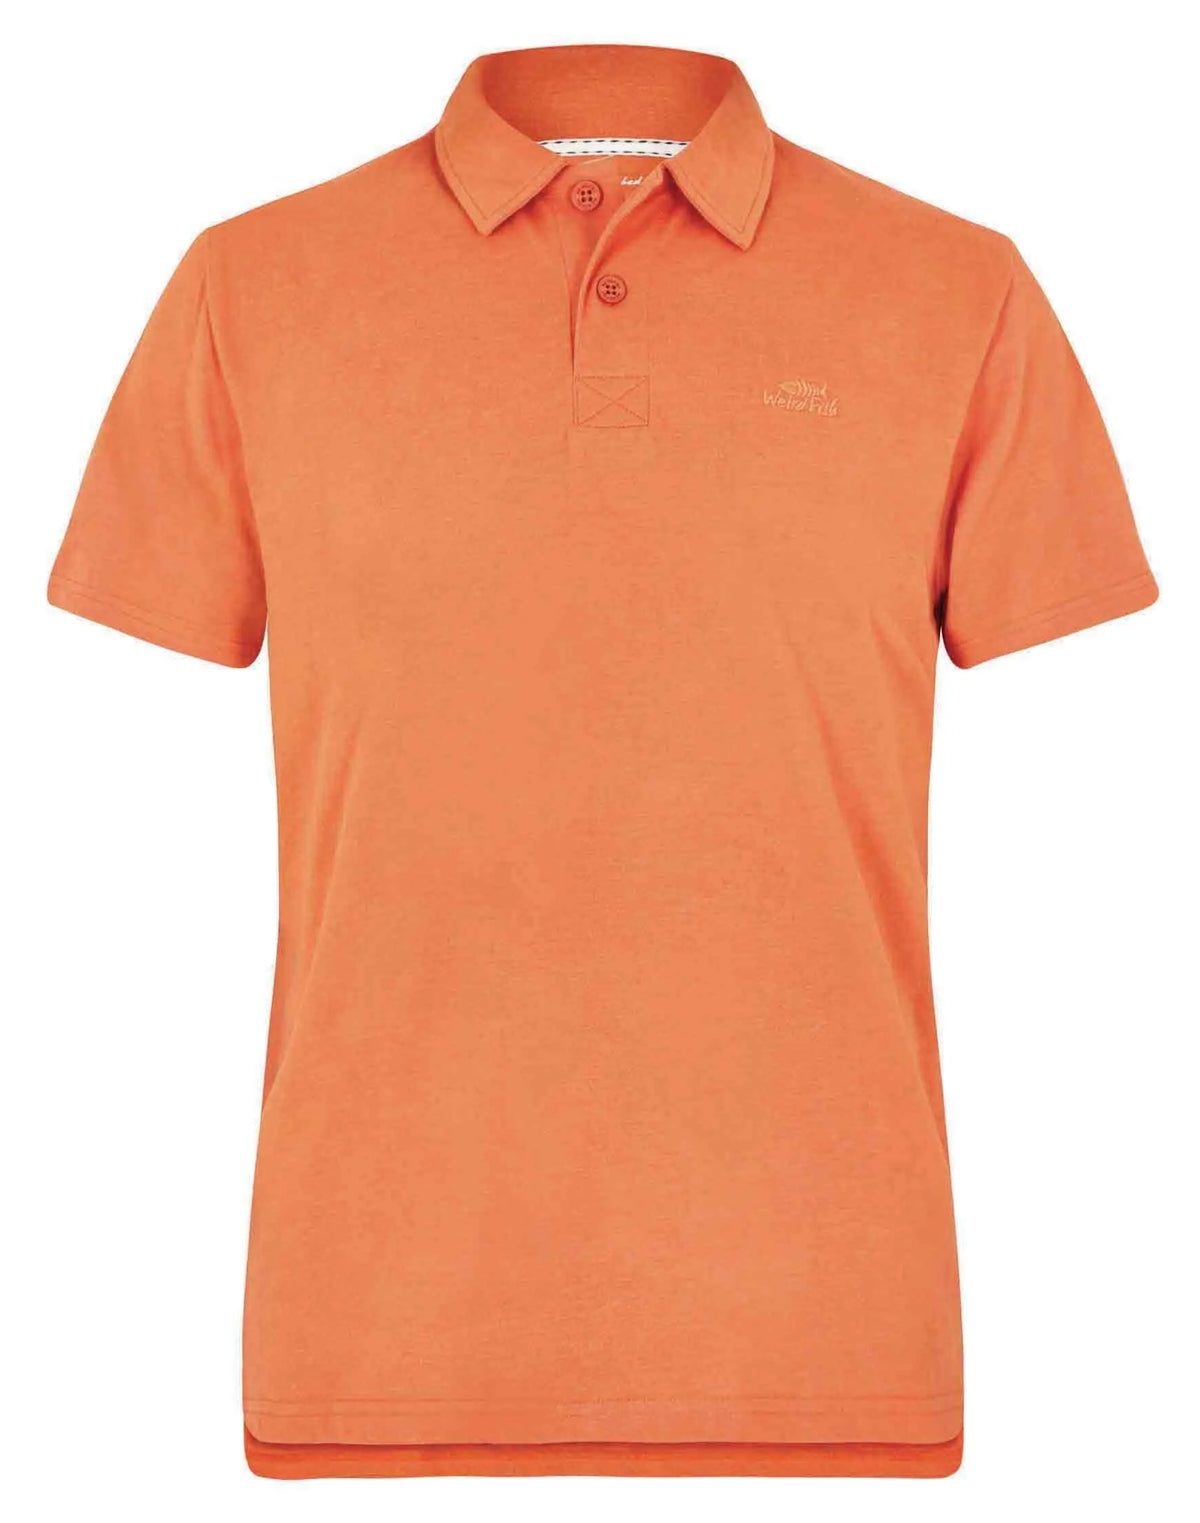 Weird Fish men's short sleeve Jetstream jersey polo shirt in Mango Orange.